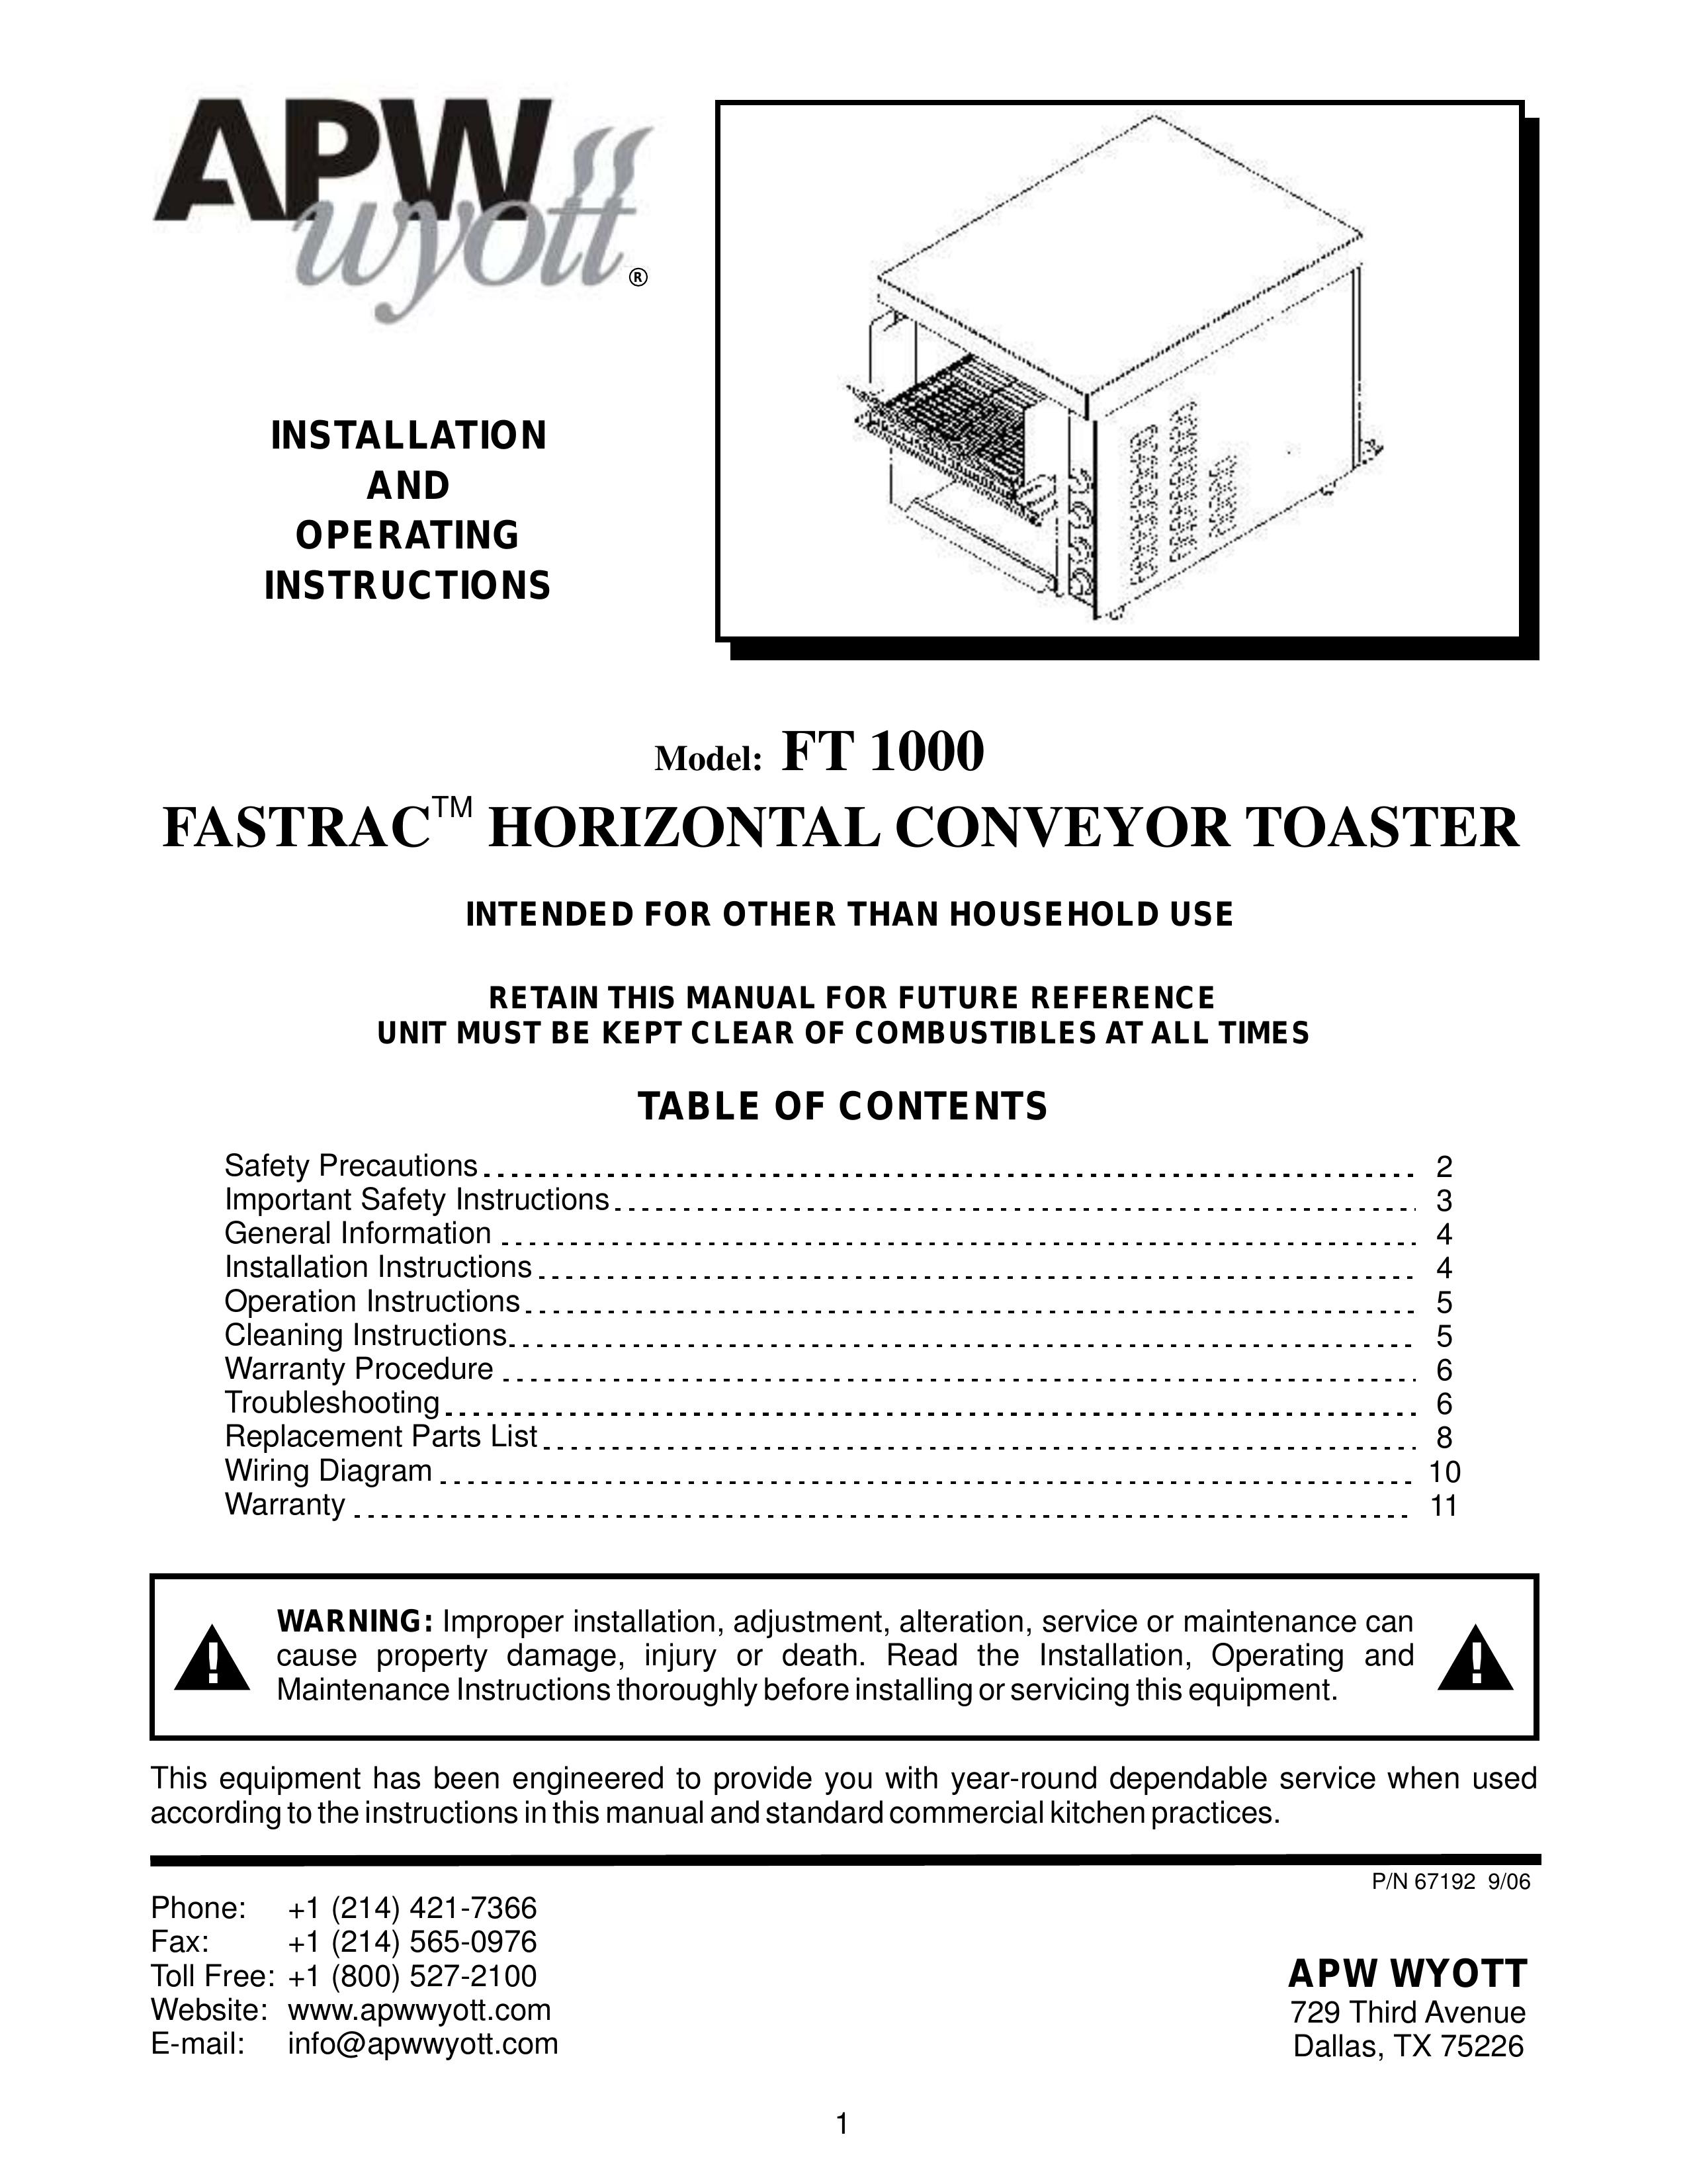 APW Wyott FT 1000 Toaster User Manual